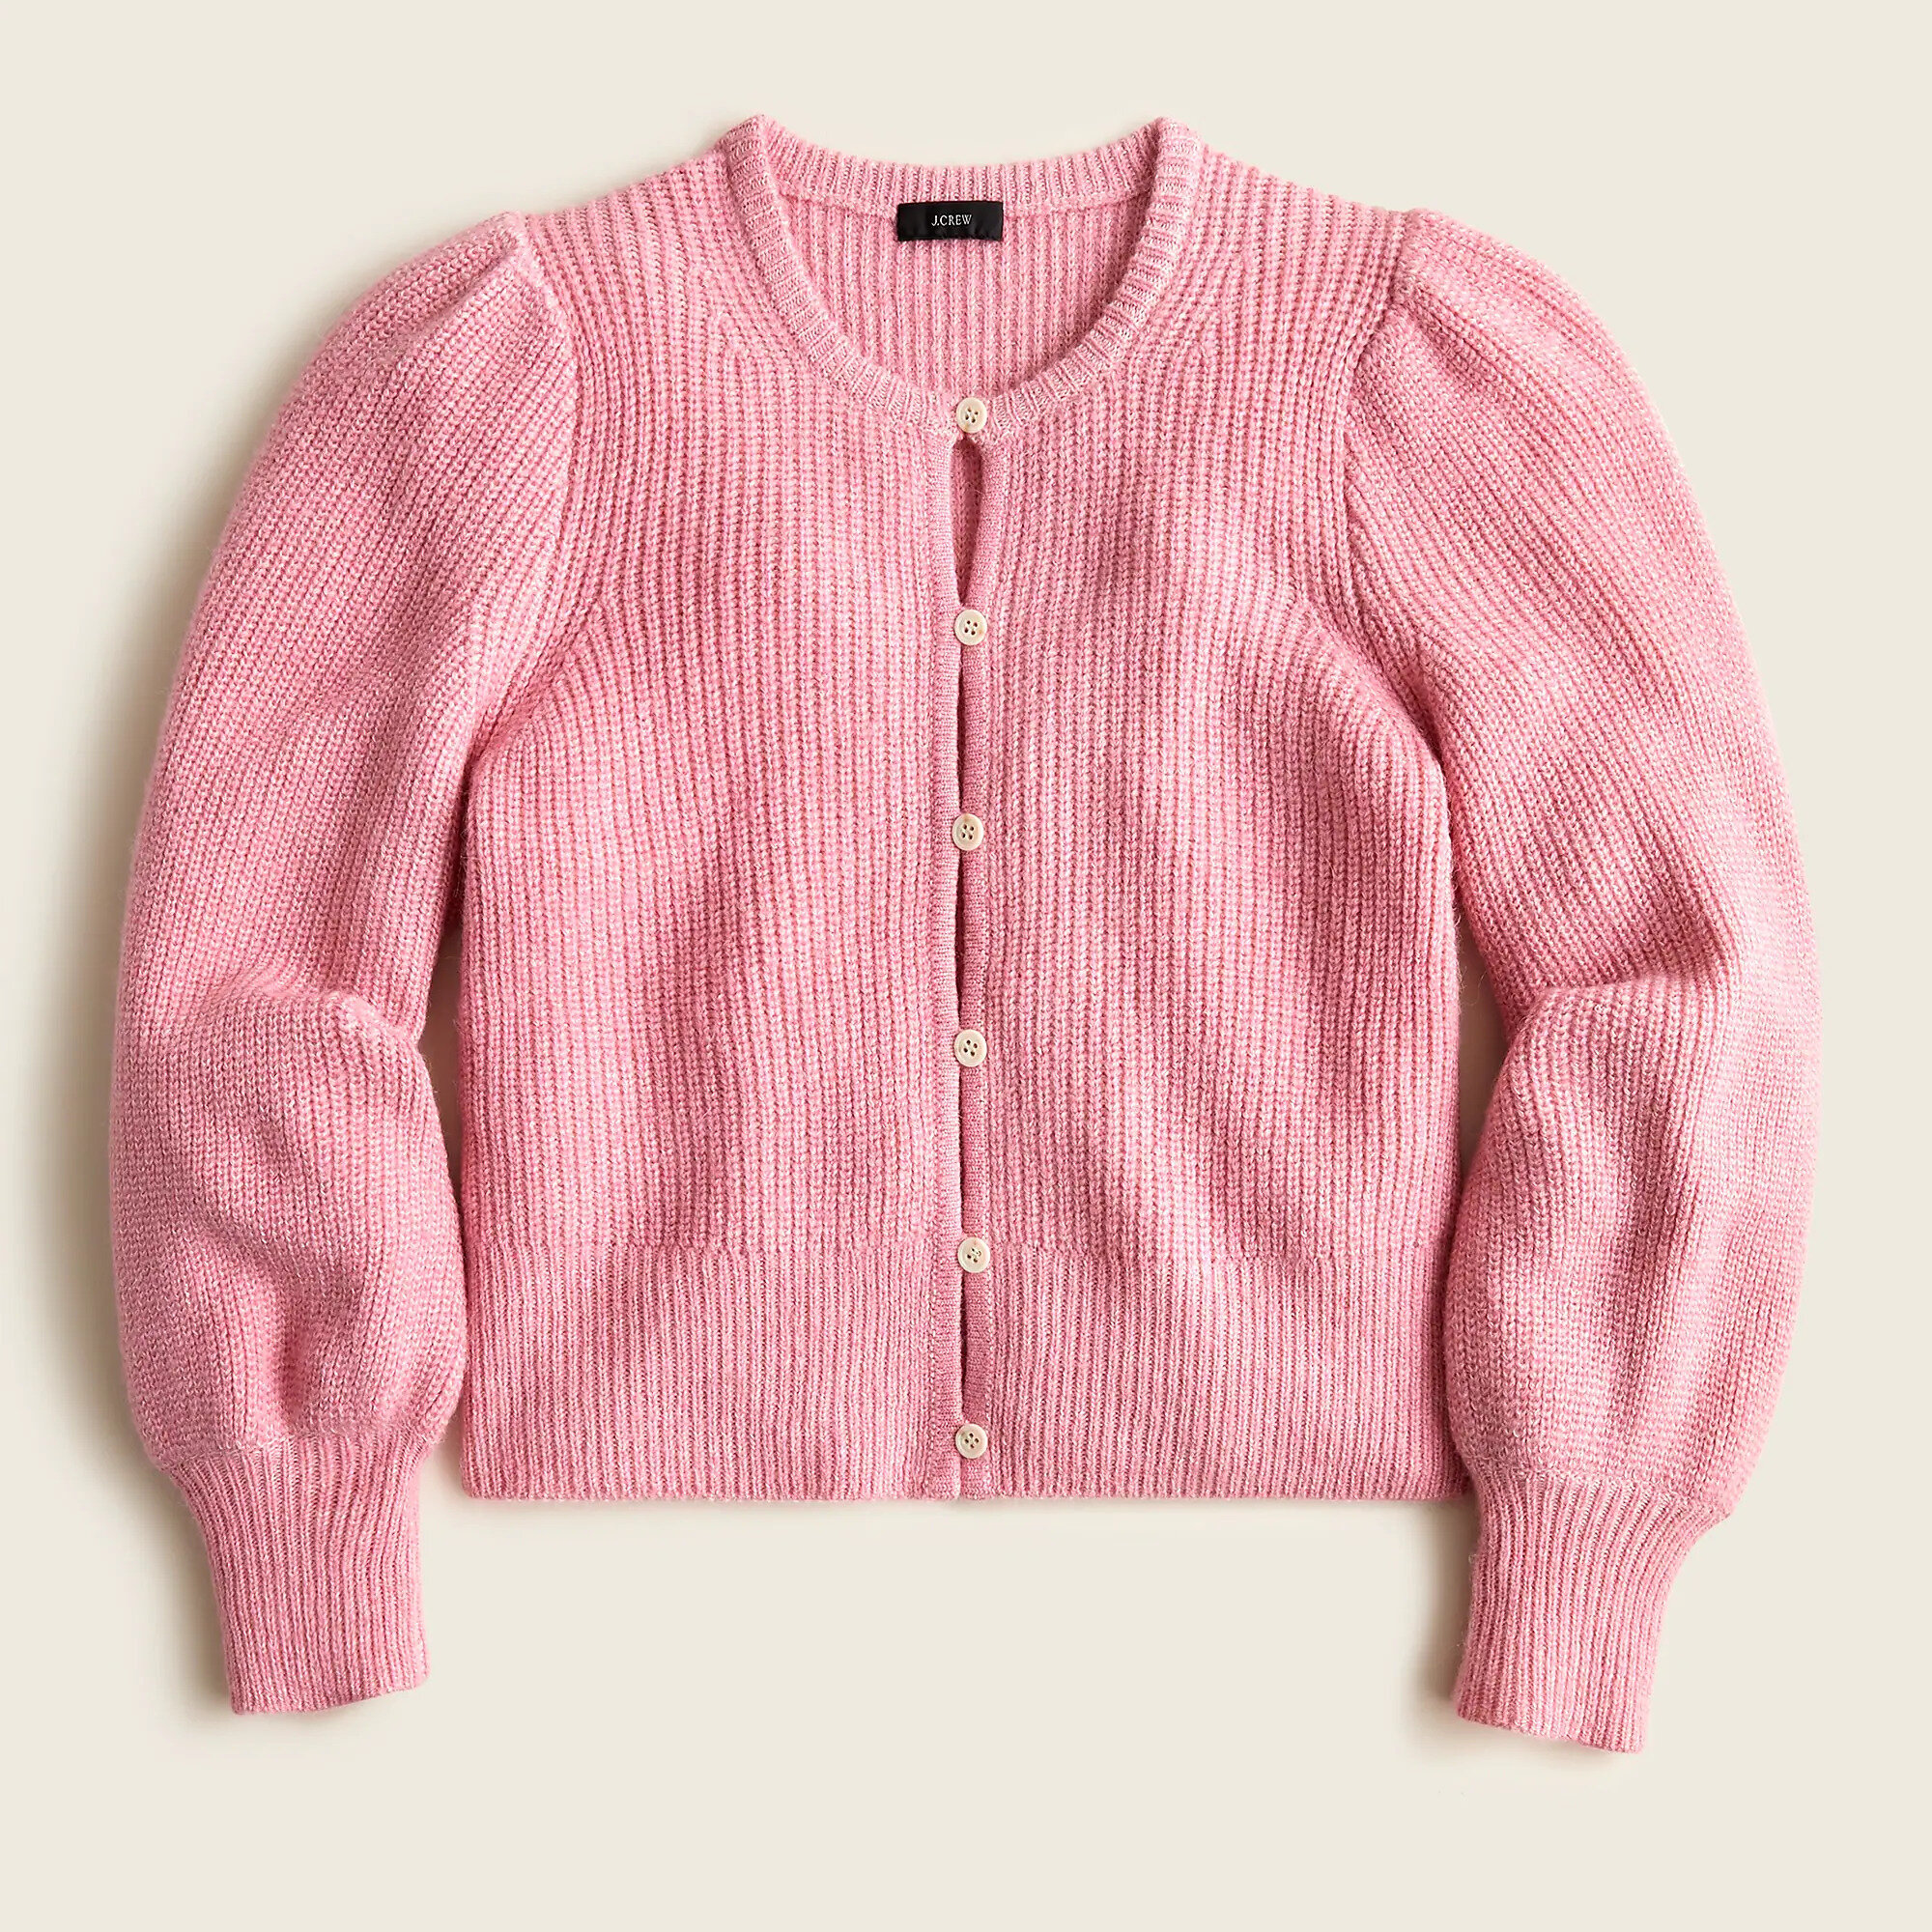 Puff-sleeve lightweight alpaca blend cardigan sweater (pink) - J Crew.jpg